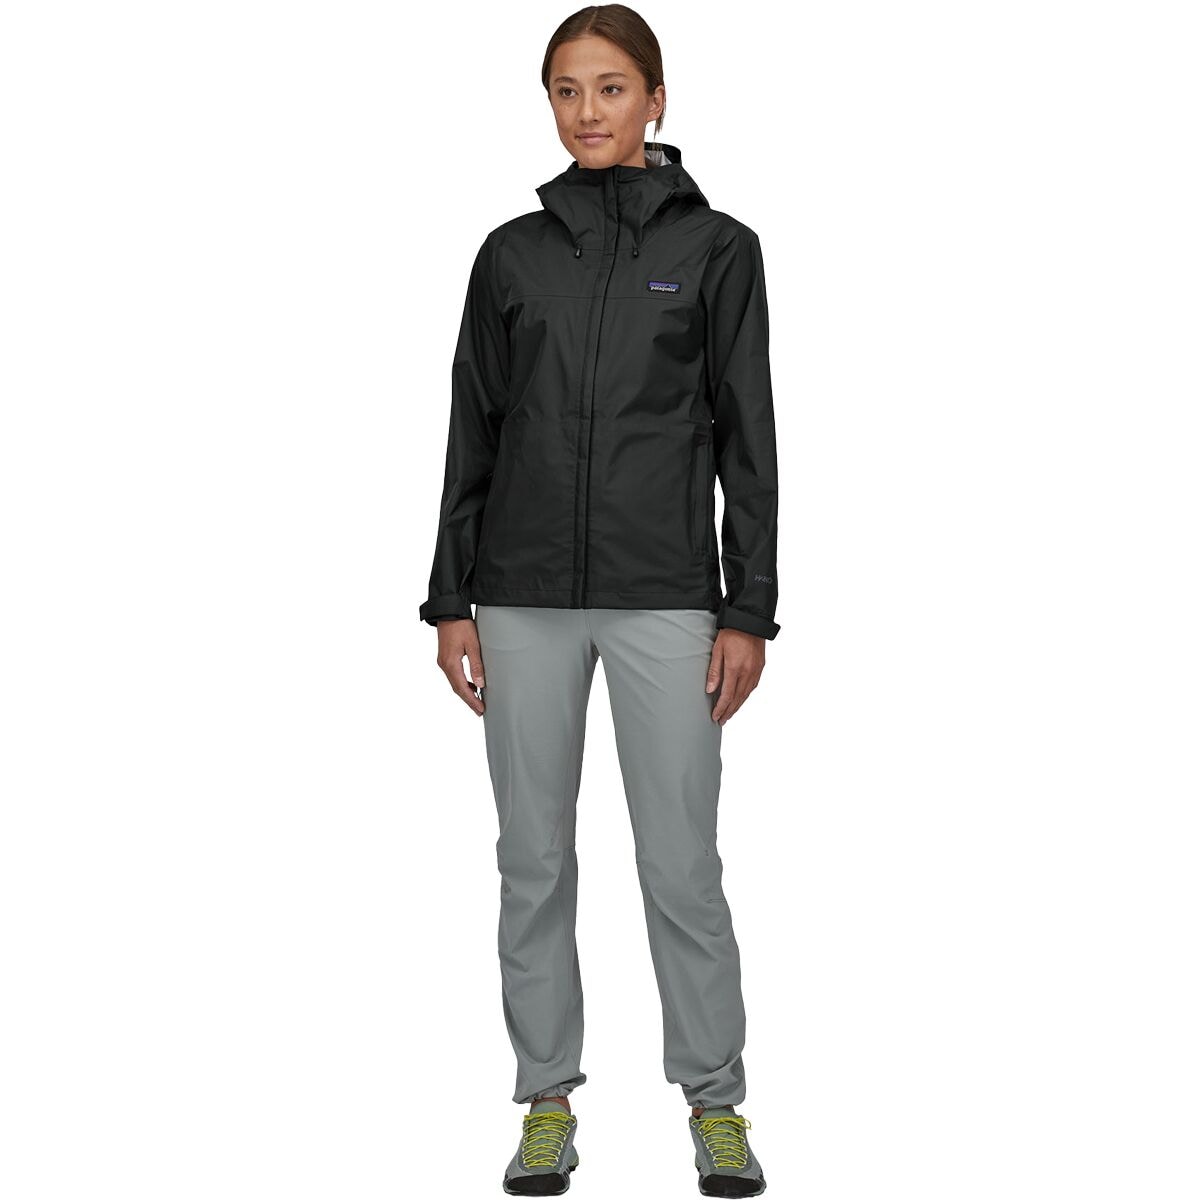 Patagonia Torrentshell 3L Jacket - Women's - Clothing